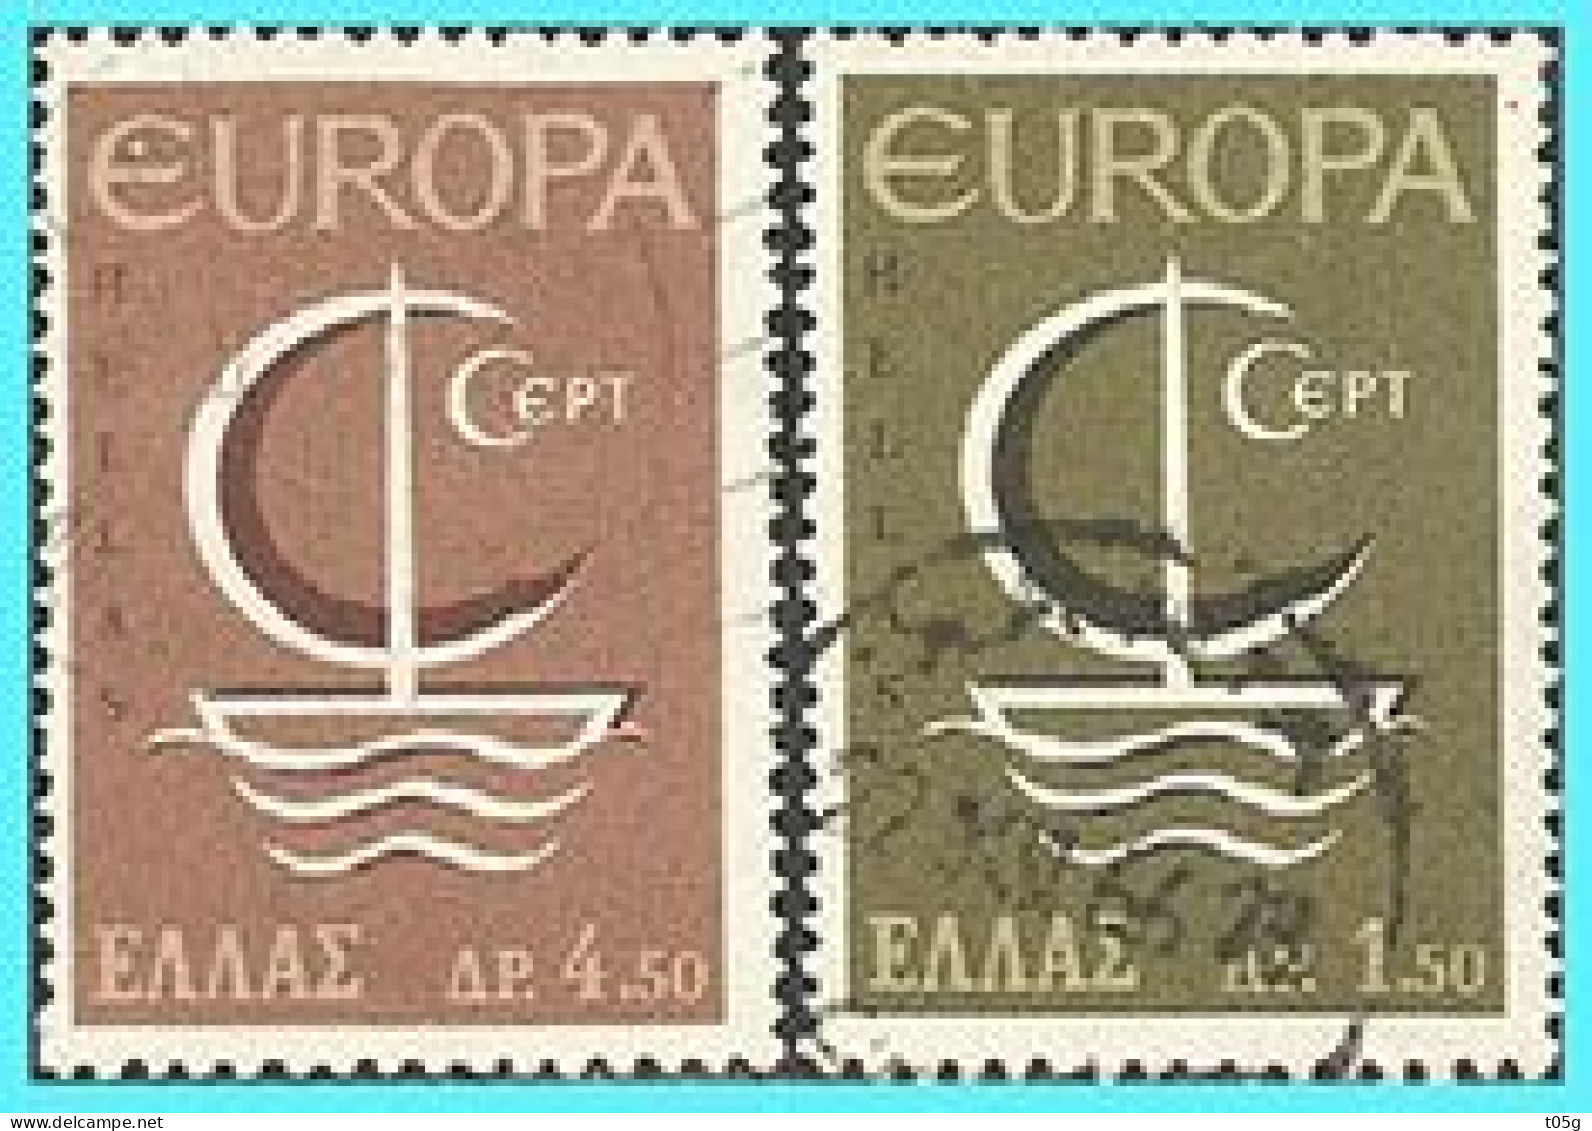 GREECE-GRECE - HELLAS 1966: Europa Compl Set Used - Gebraucht